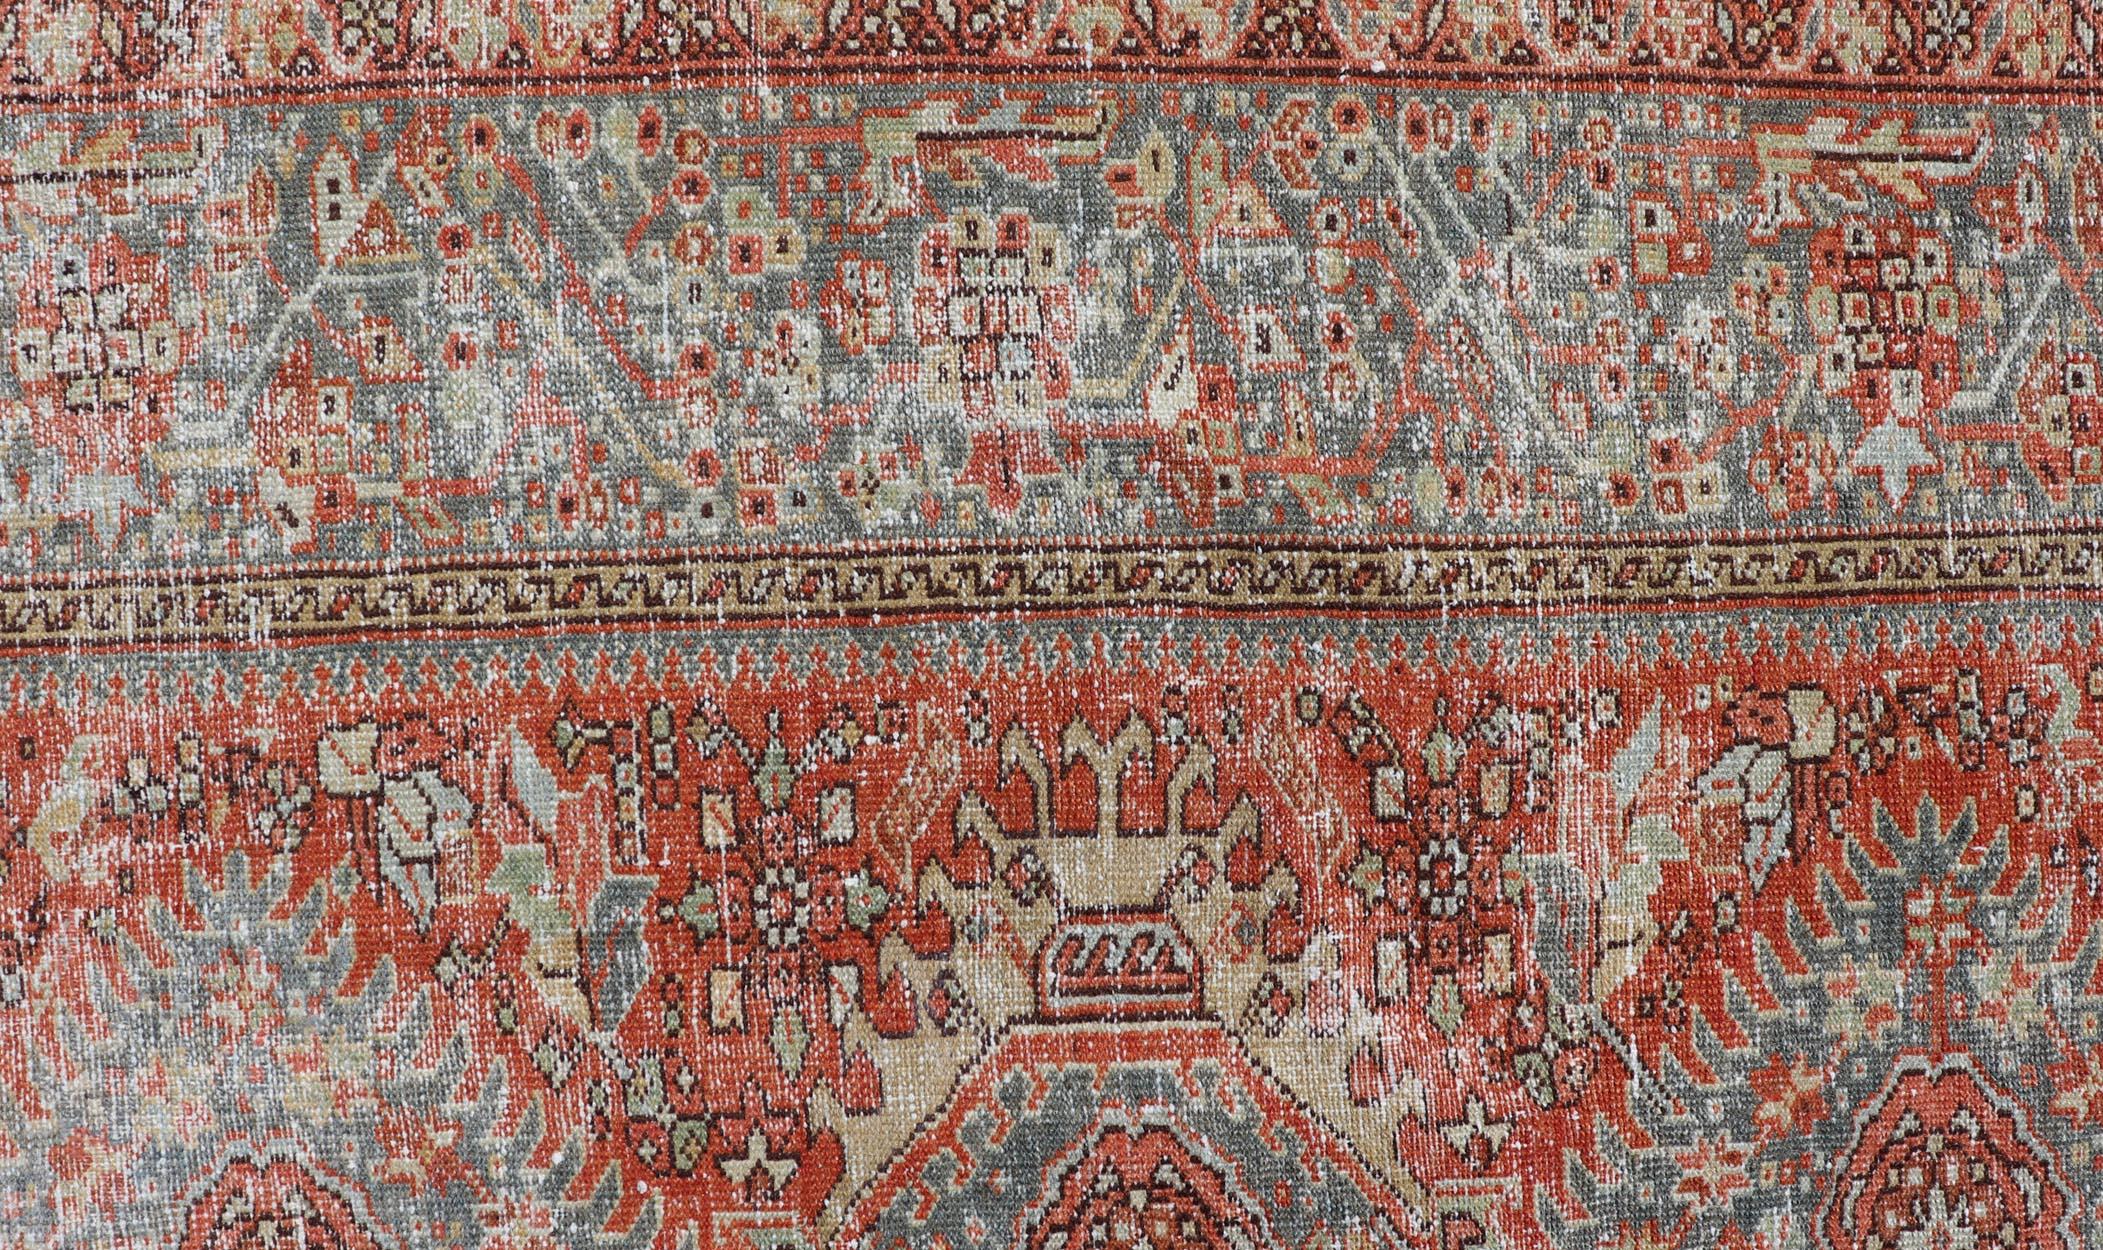 Antique Persian All-Over Heriz Rug with All-Over Geometric Medallion Design. Keivan Woven Arts / Rug / EMB-22205-15095, country of origin / type: Iran /Heriz, circa 1930
Measures: 7'5 x 10'5 
This antique Persian Heriz rug, from northwest Iran,